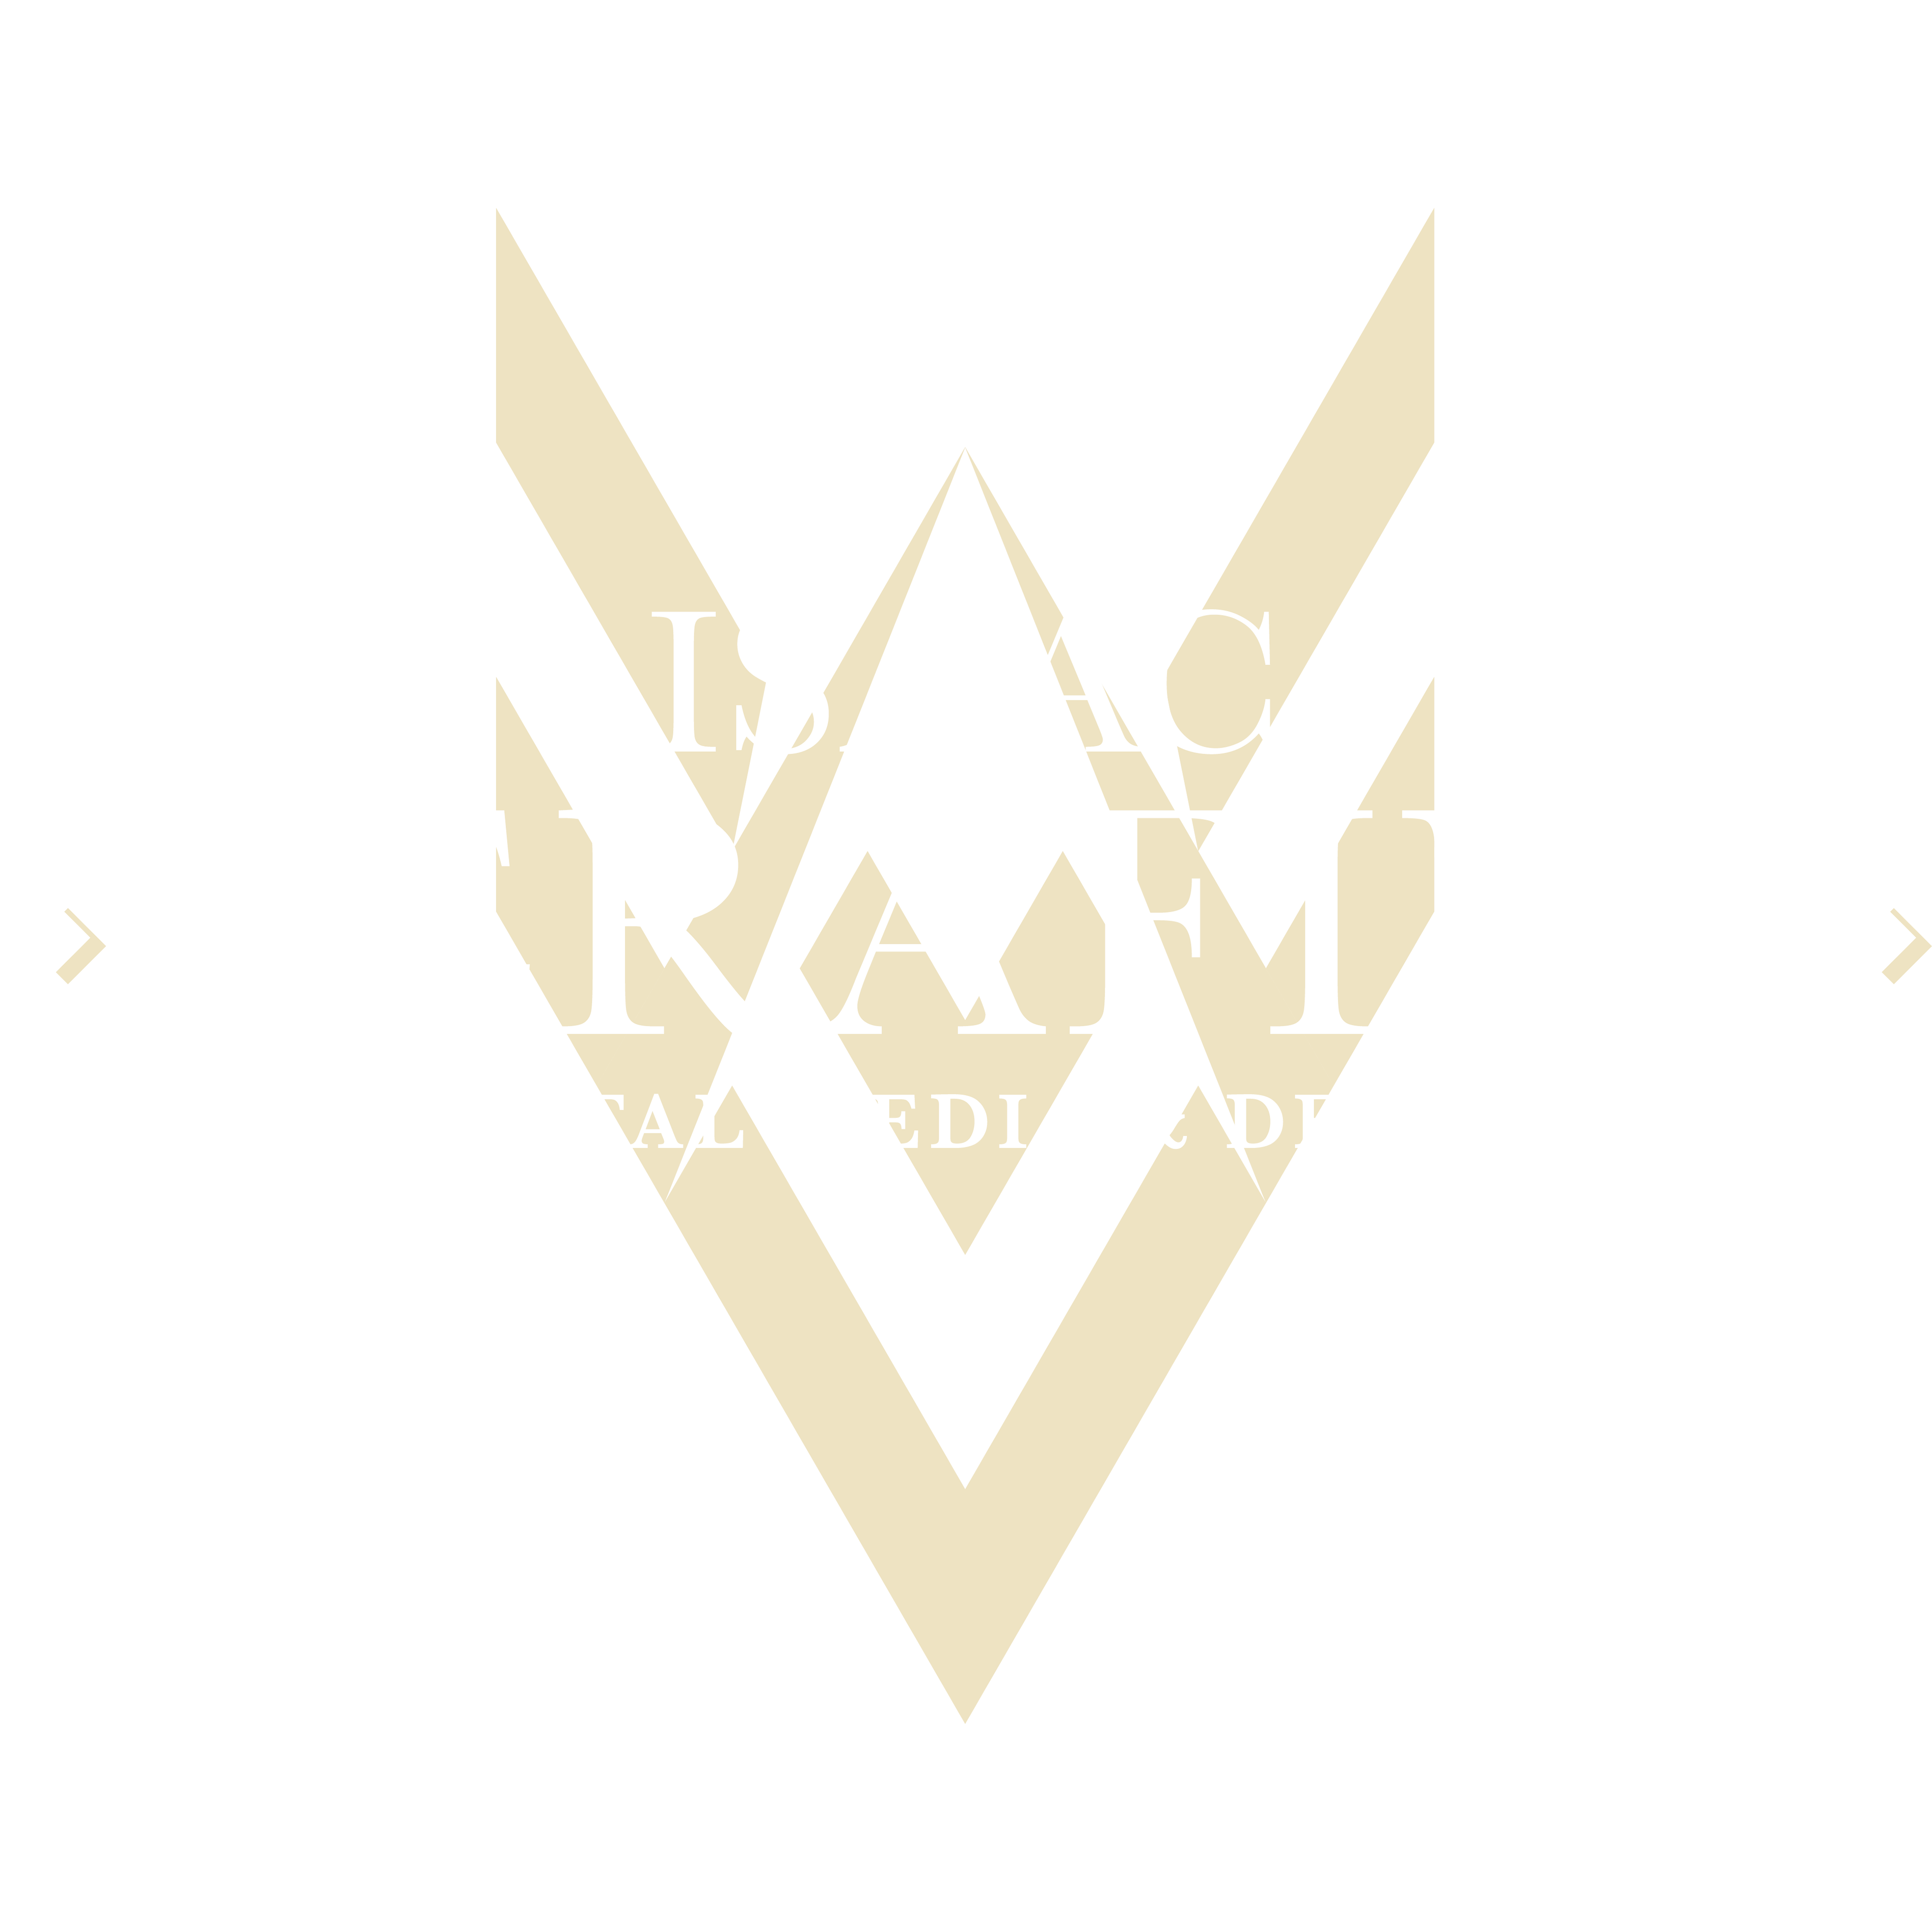 Isaac Serafini